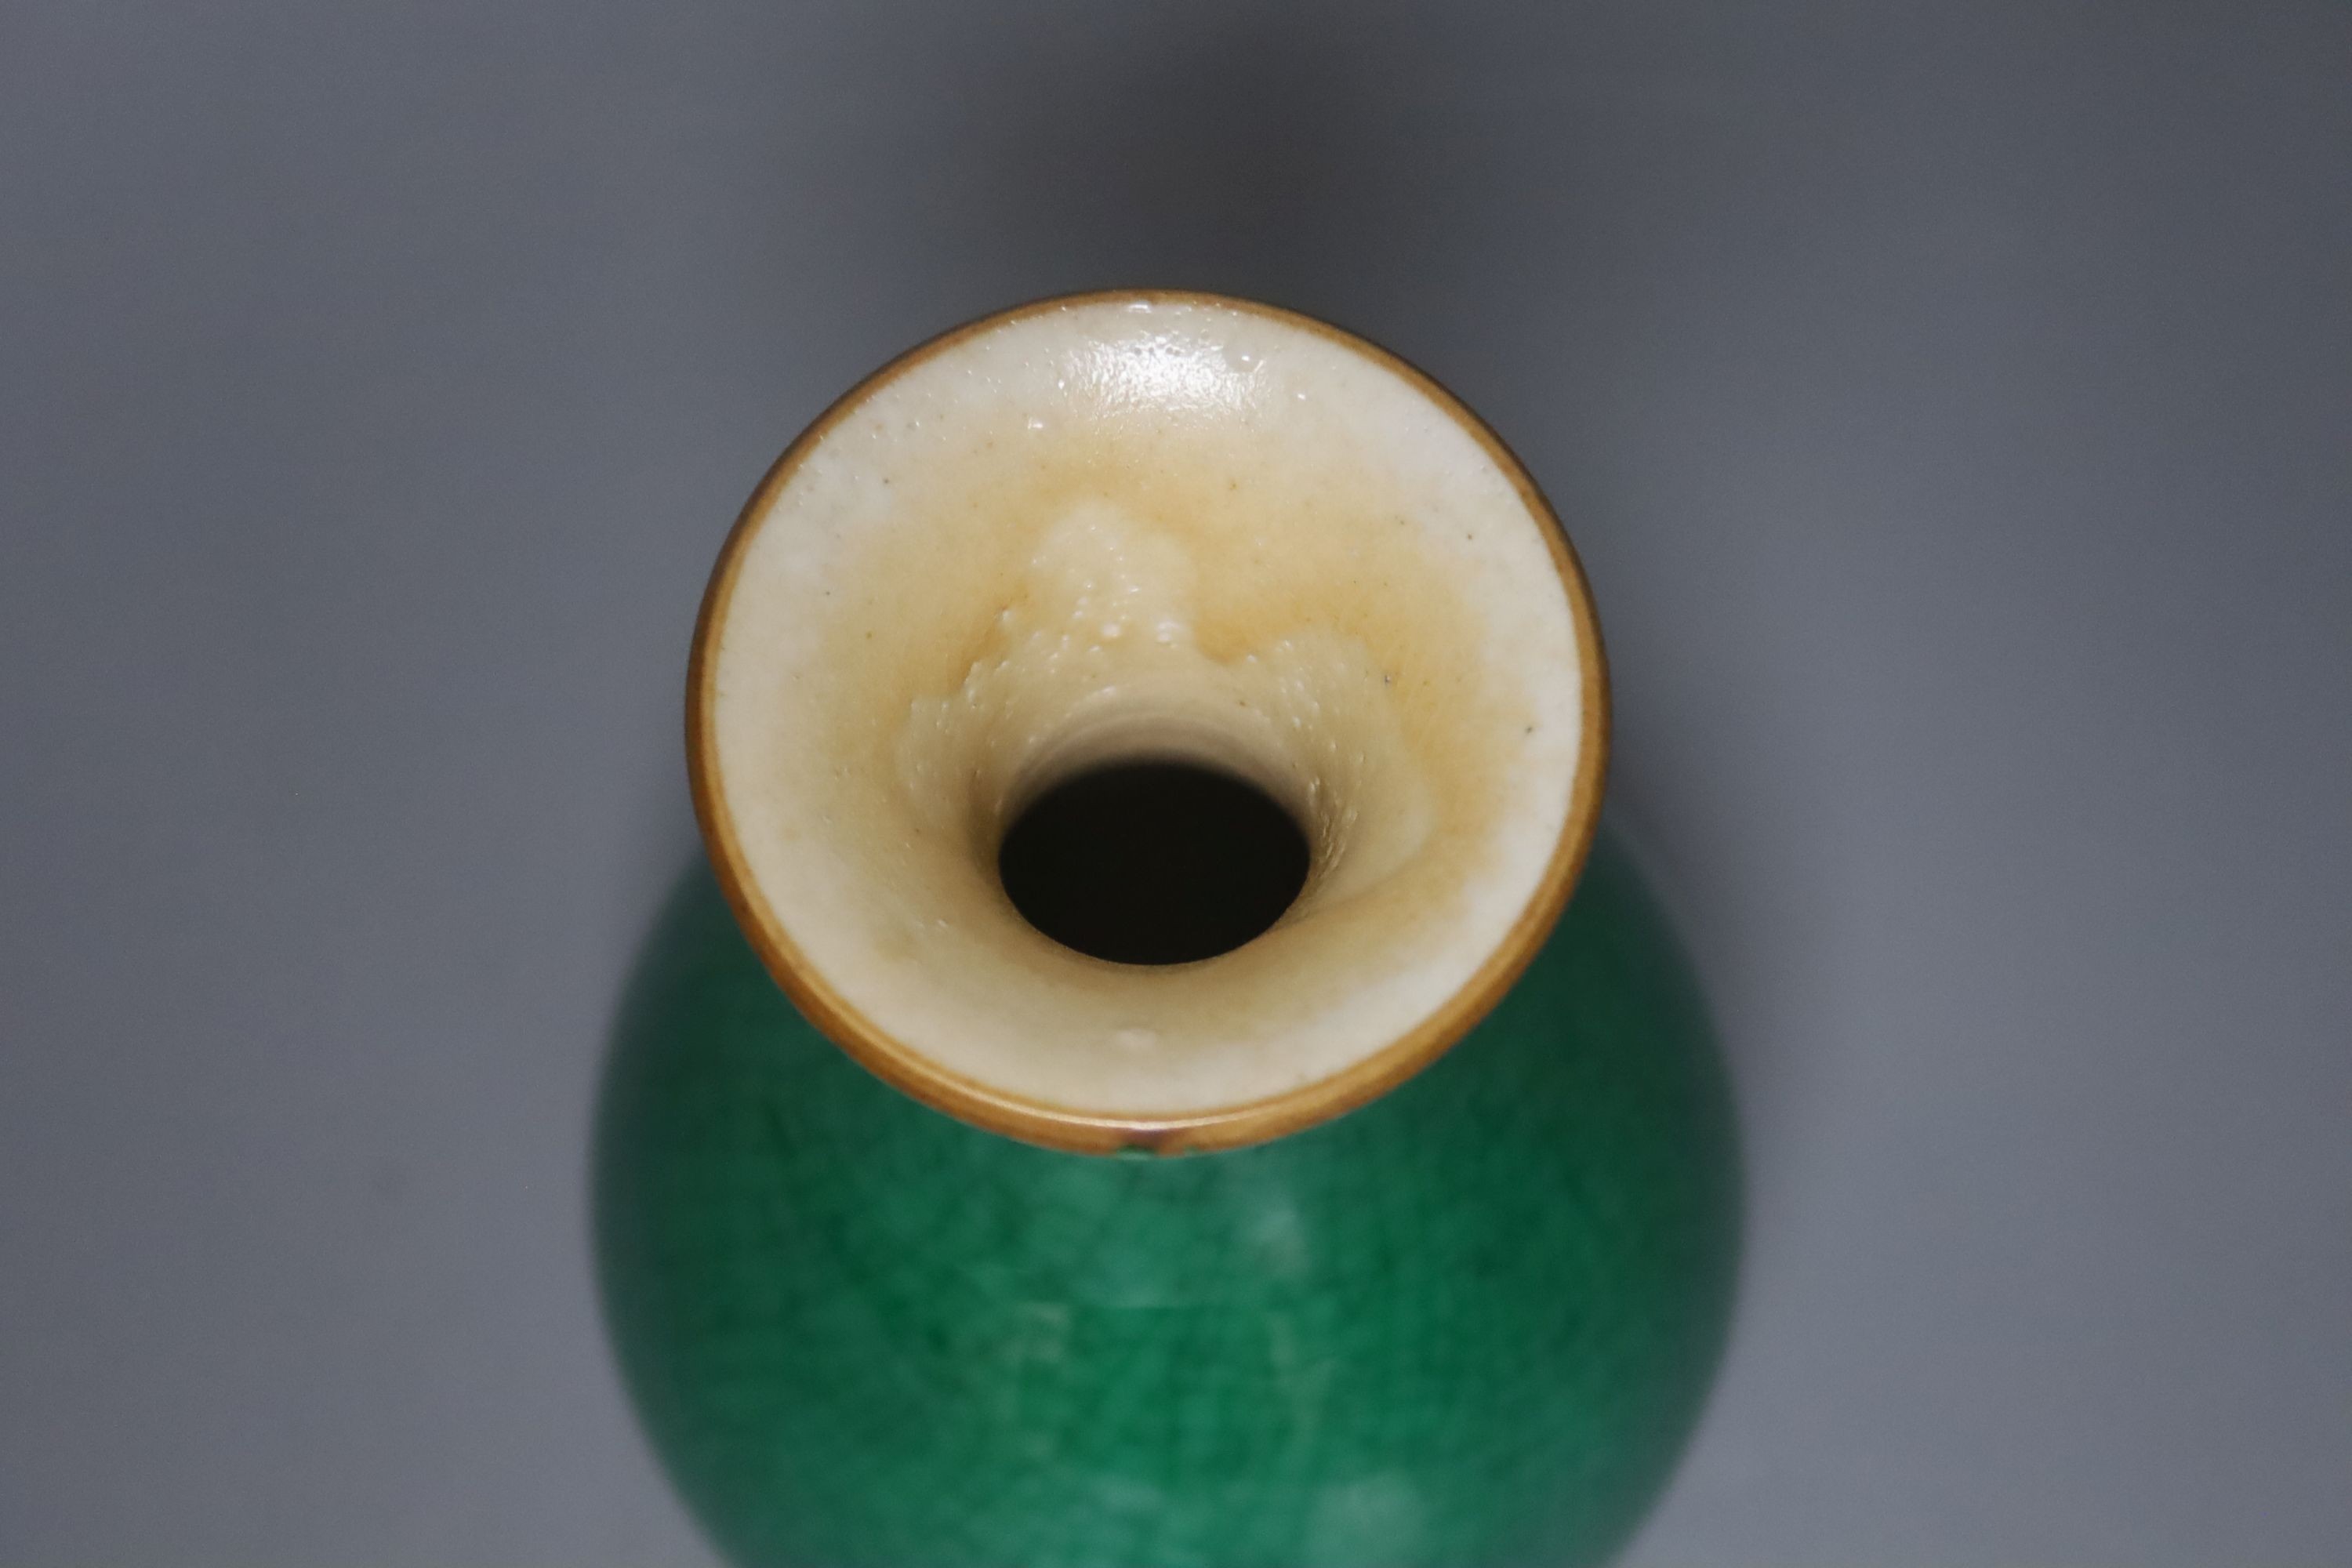 A Chinese green crackle glaze baluster vase, 16cm